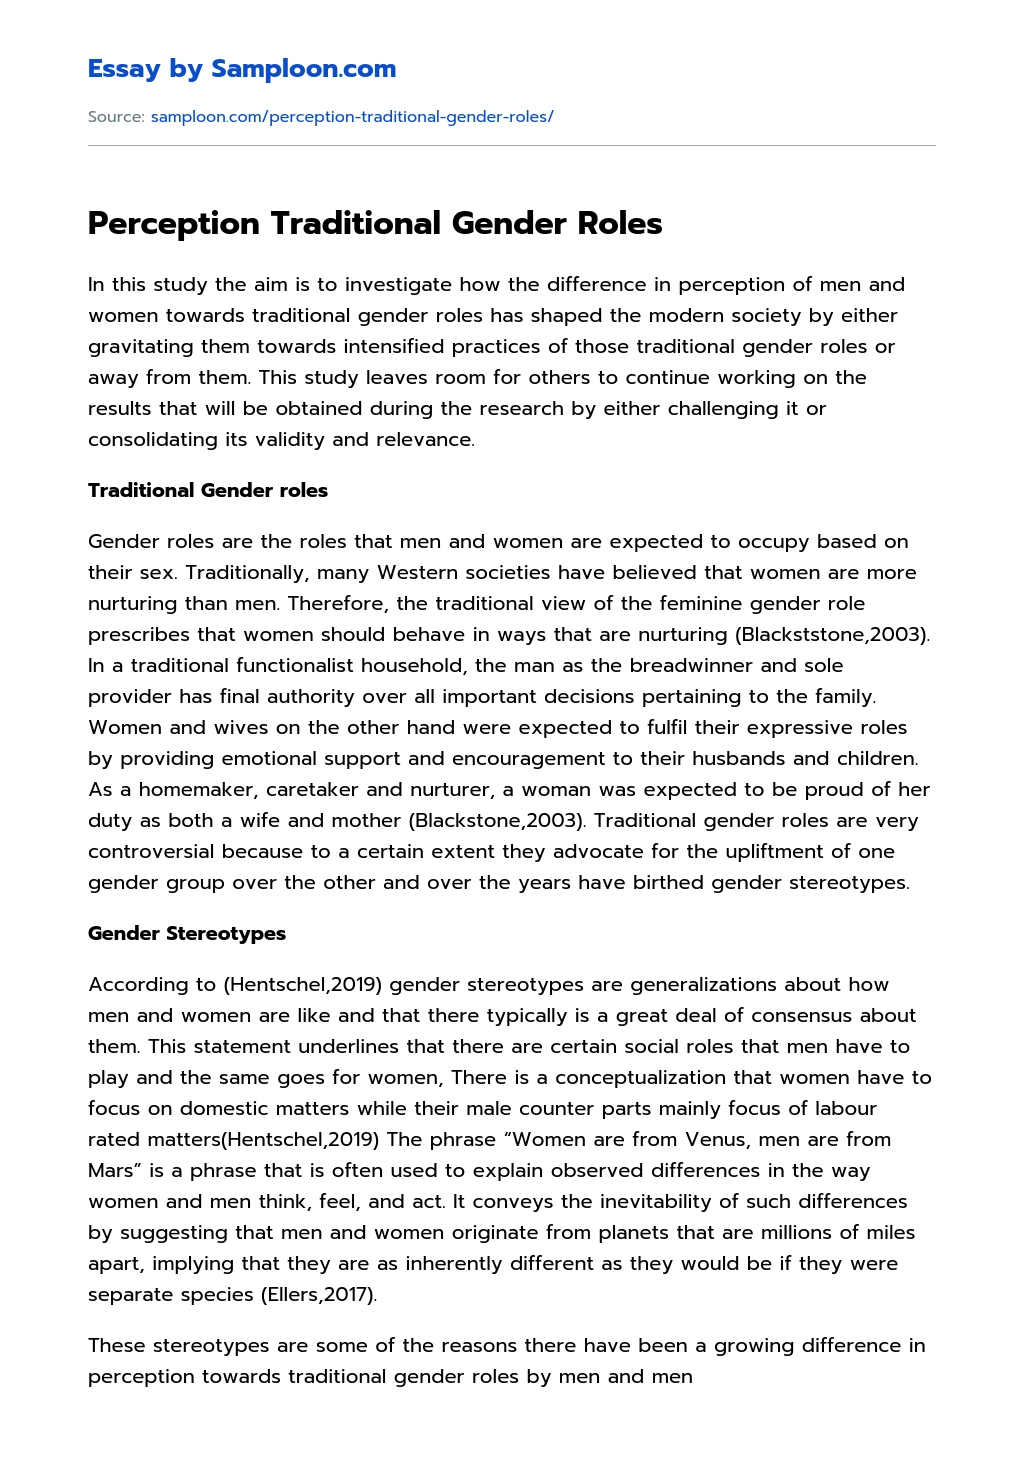 Perception Traditional Gender Roles essay